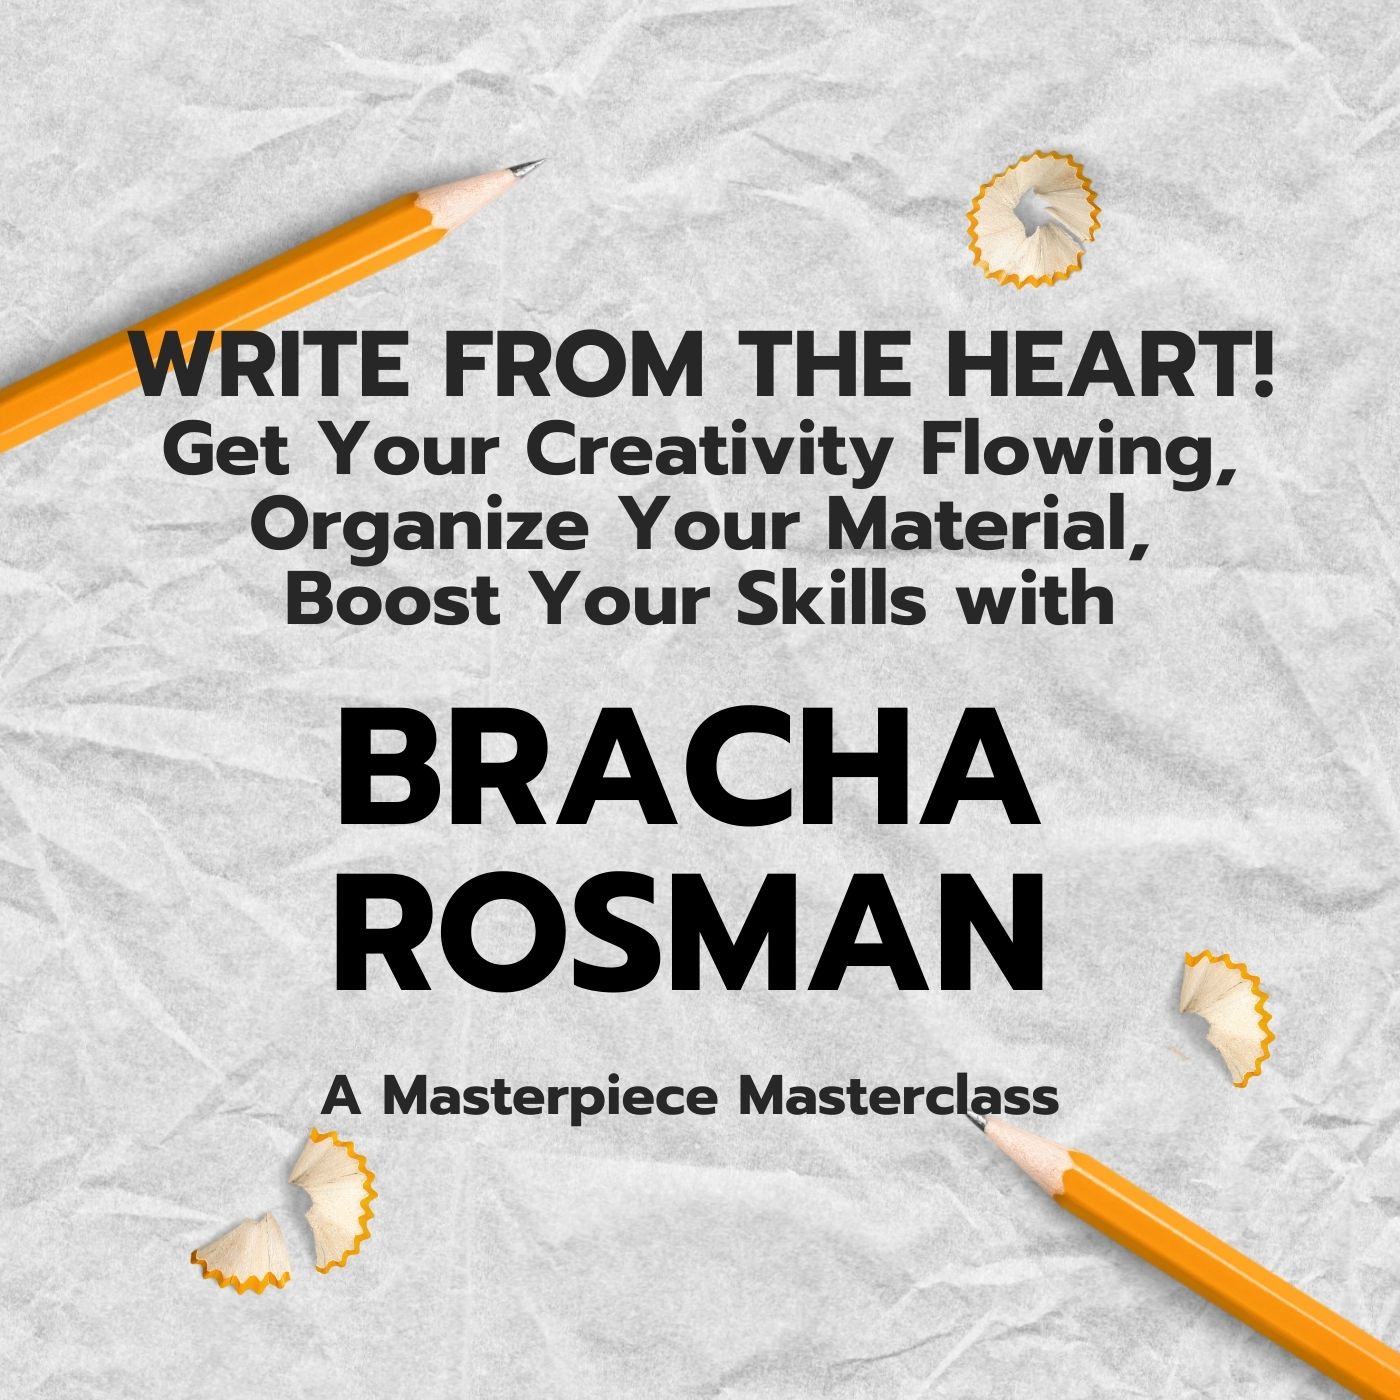 BRACHA ROSMAN Teaches Fiction Writing! 🔥❤️‍🔥